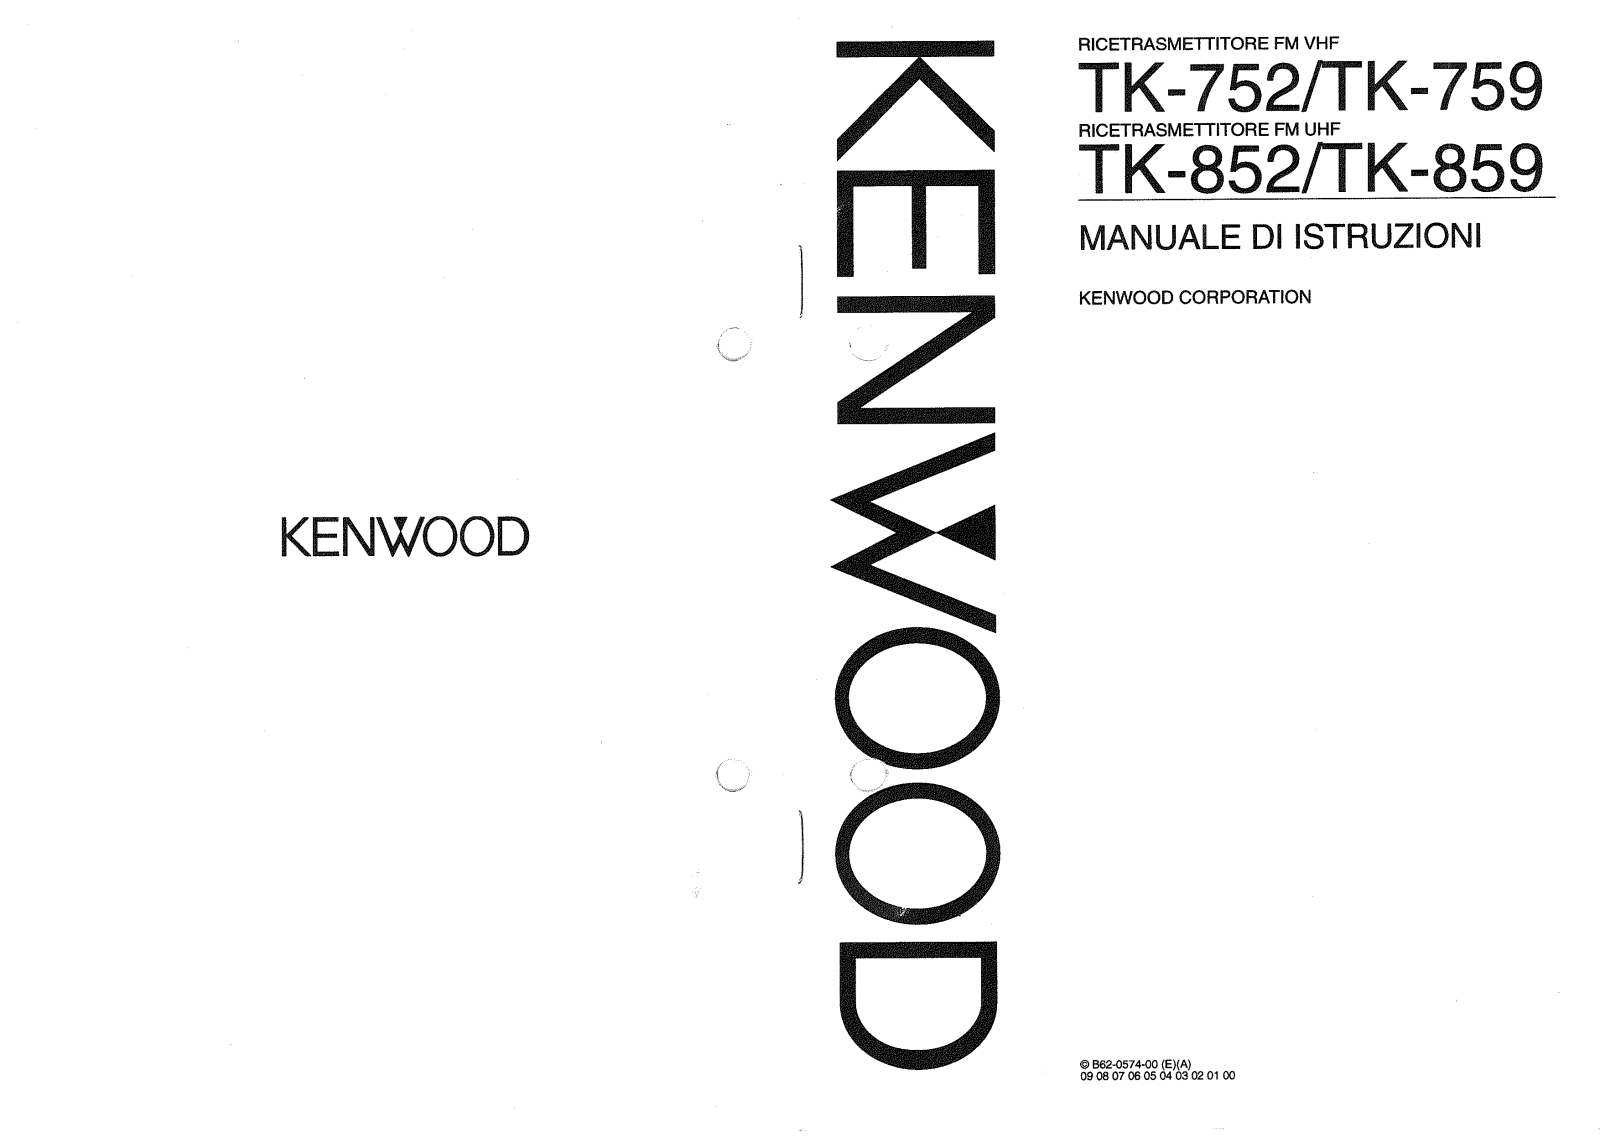 Kenwood TK-759, TK-859, TK-752 User's Manual